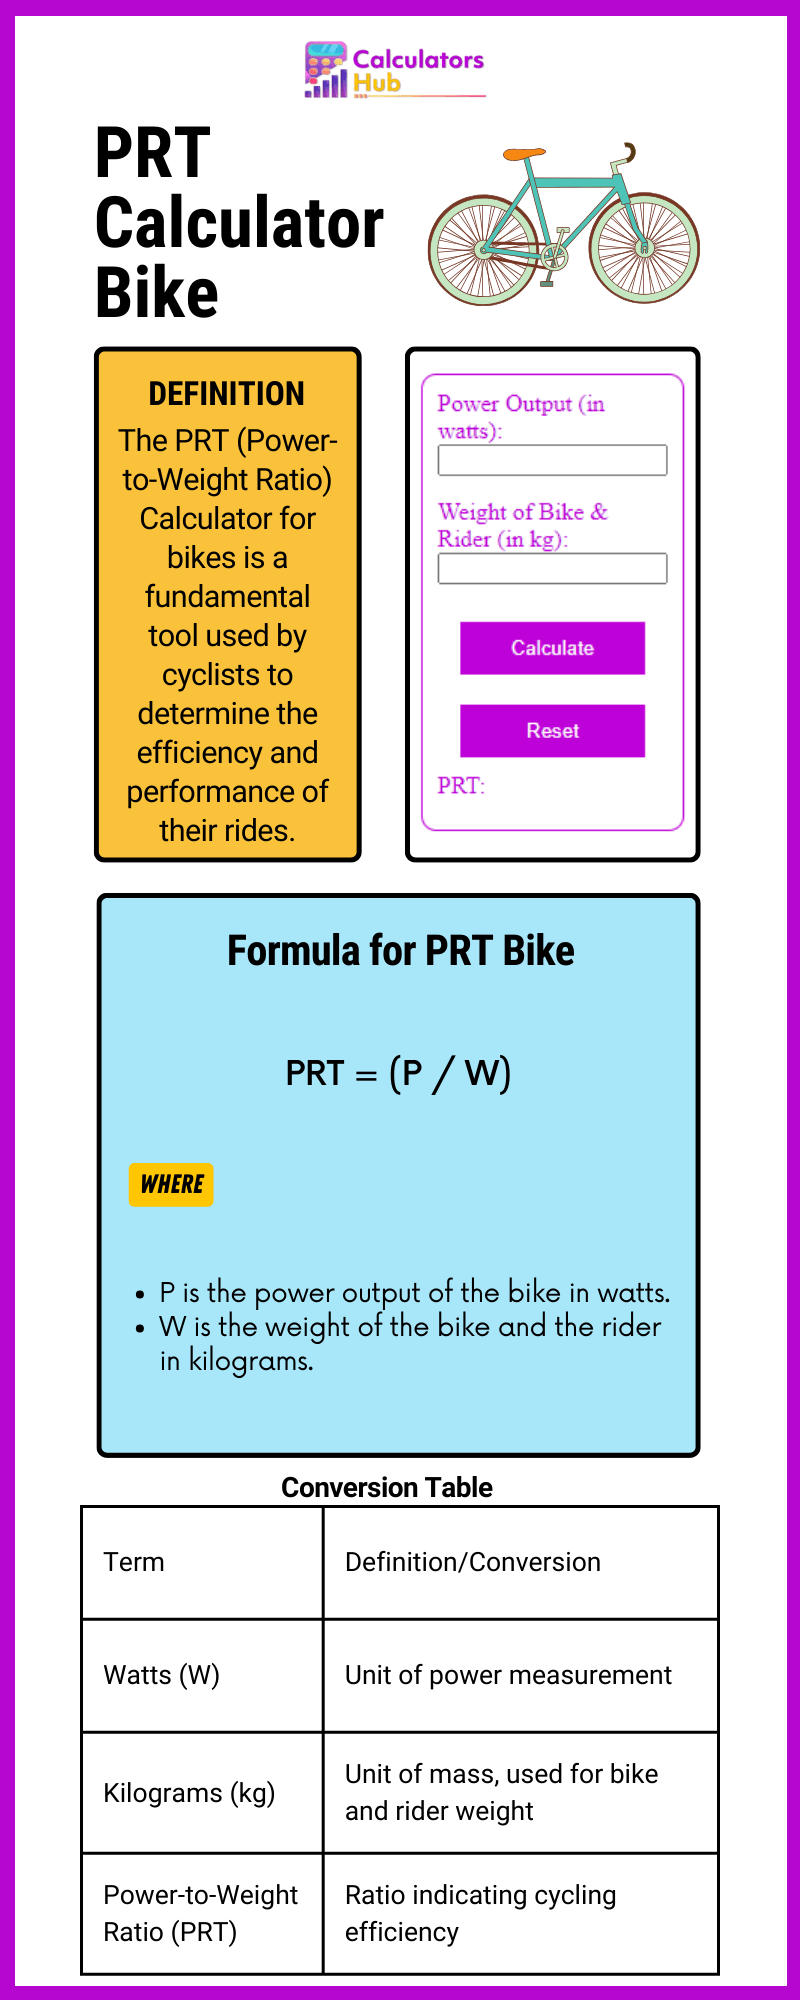 PRT Calculator Bike